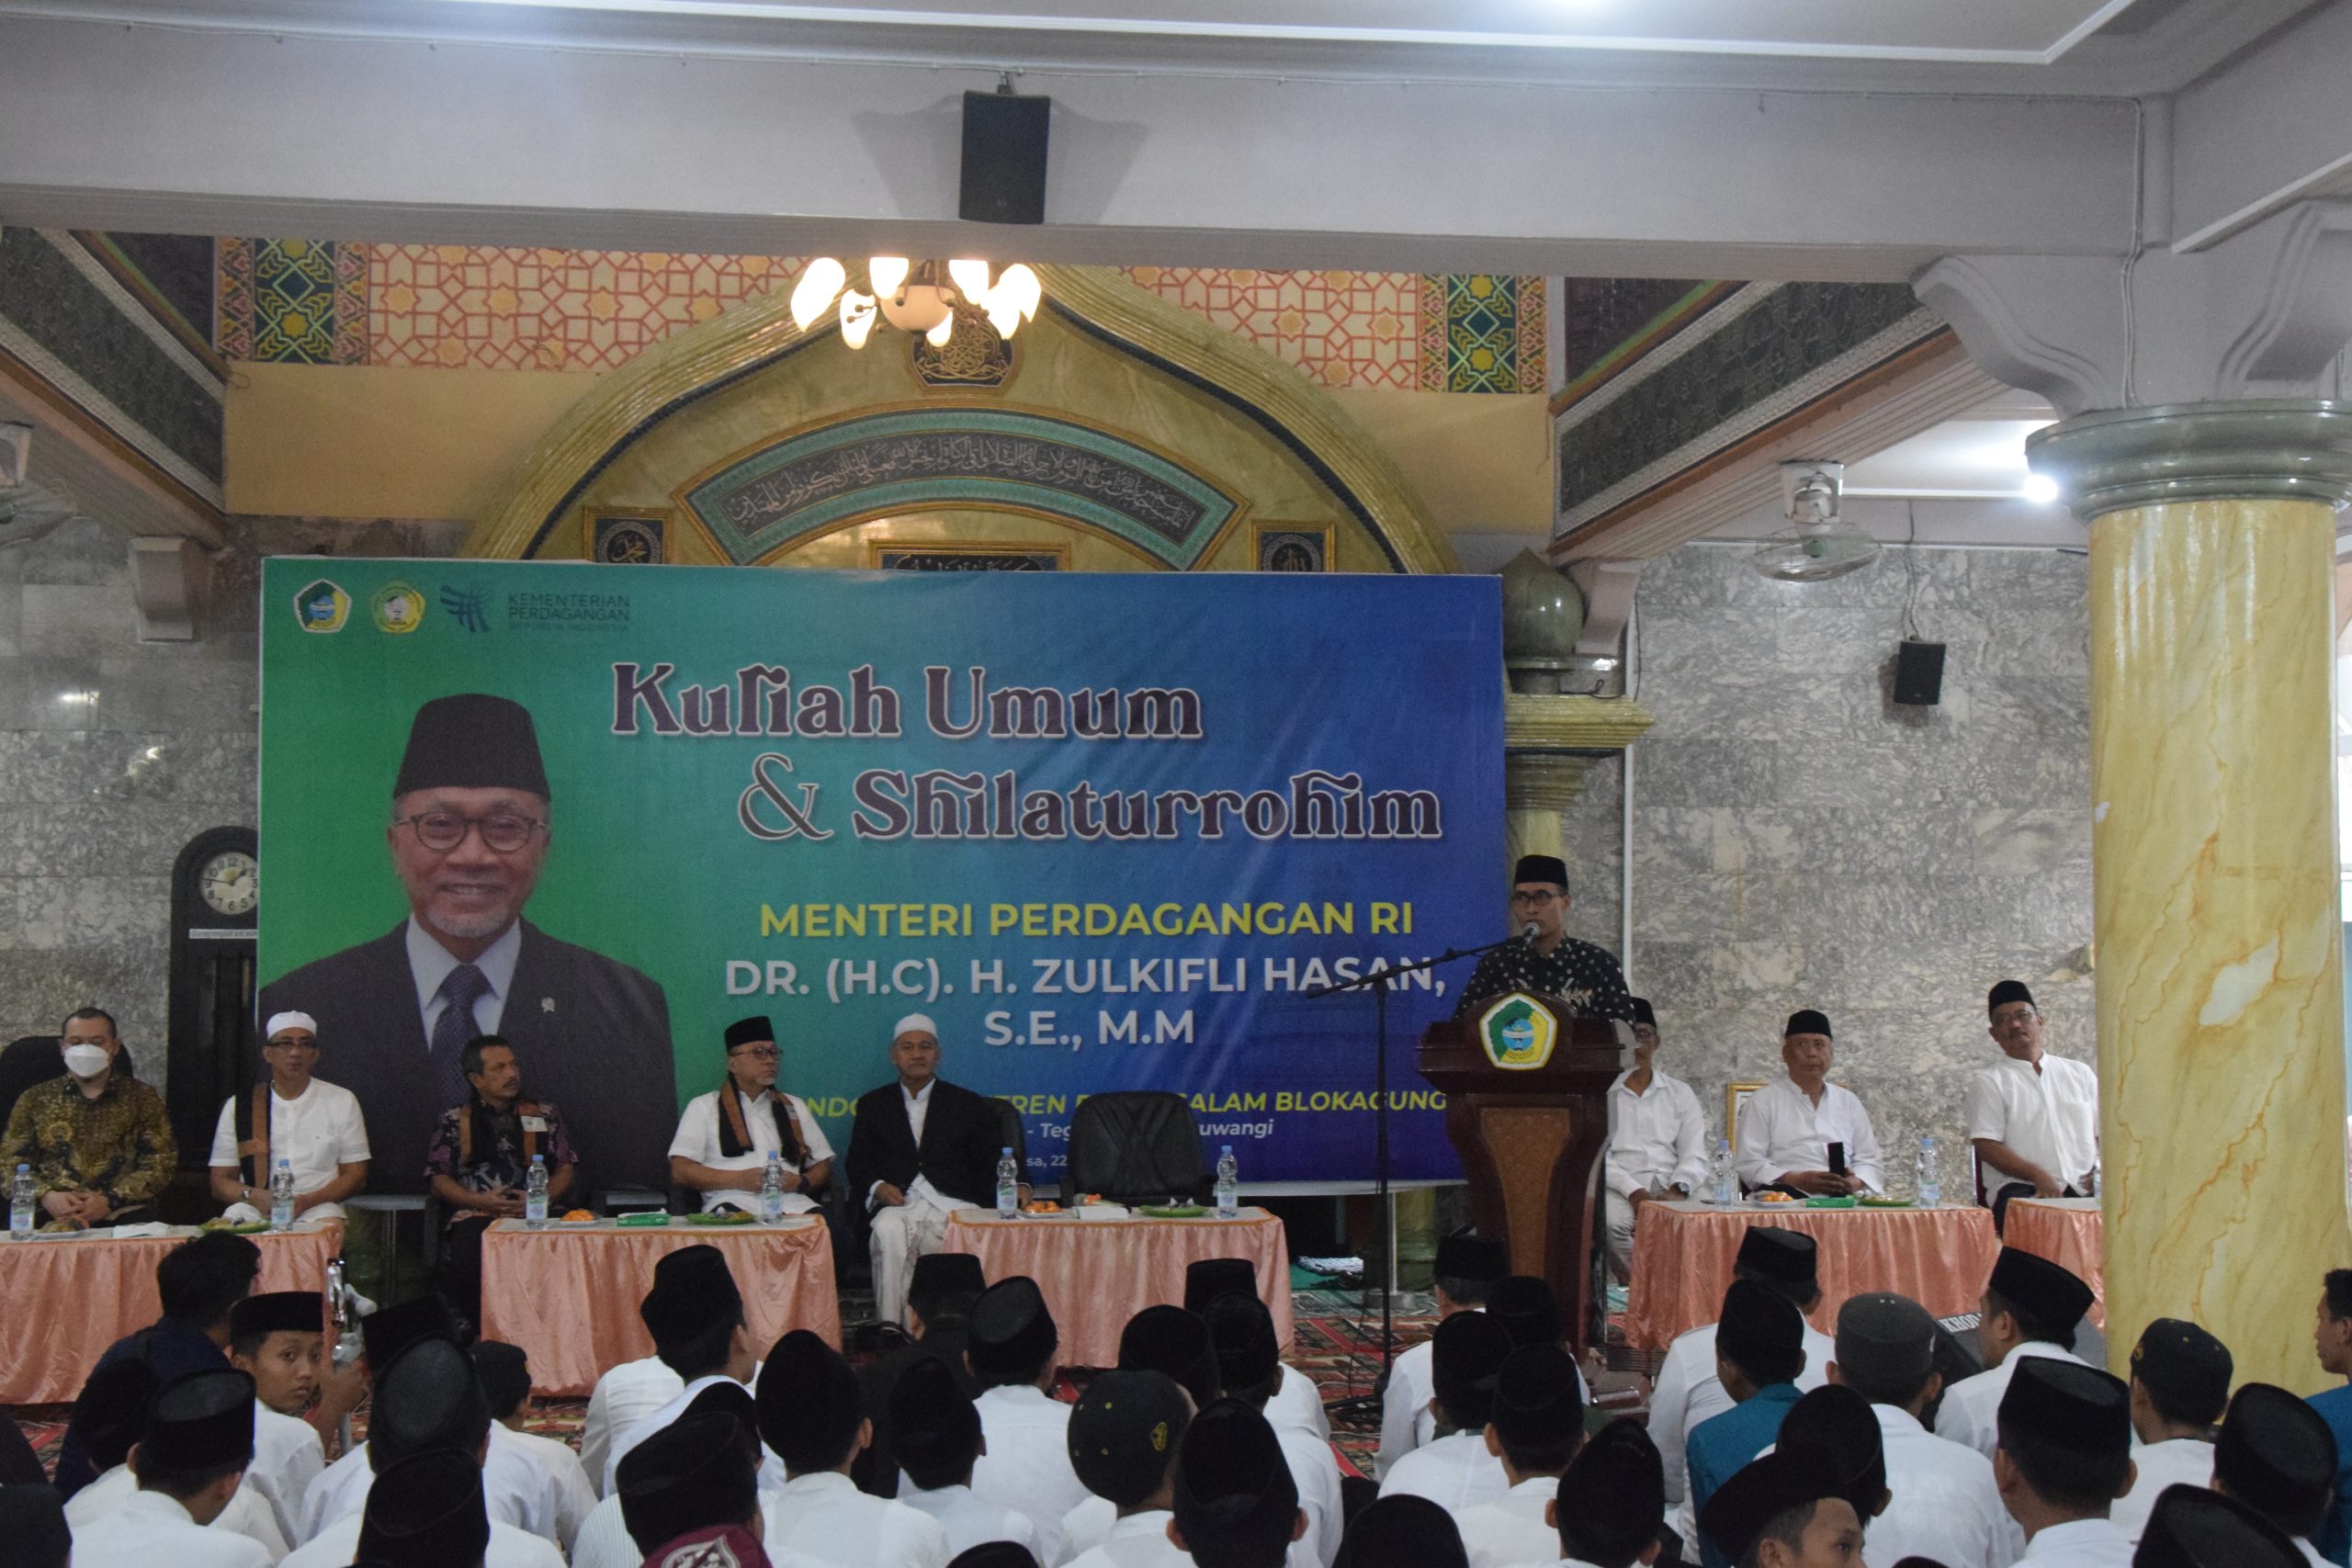 Menteri Perdagangan Republik Indonesia DR. (H.C) H. Zulkifli Hasan S.E.,M.M kunjungi Pondok Pesantren Darussalam Blokagung